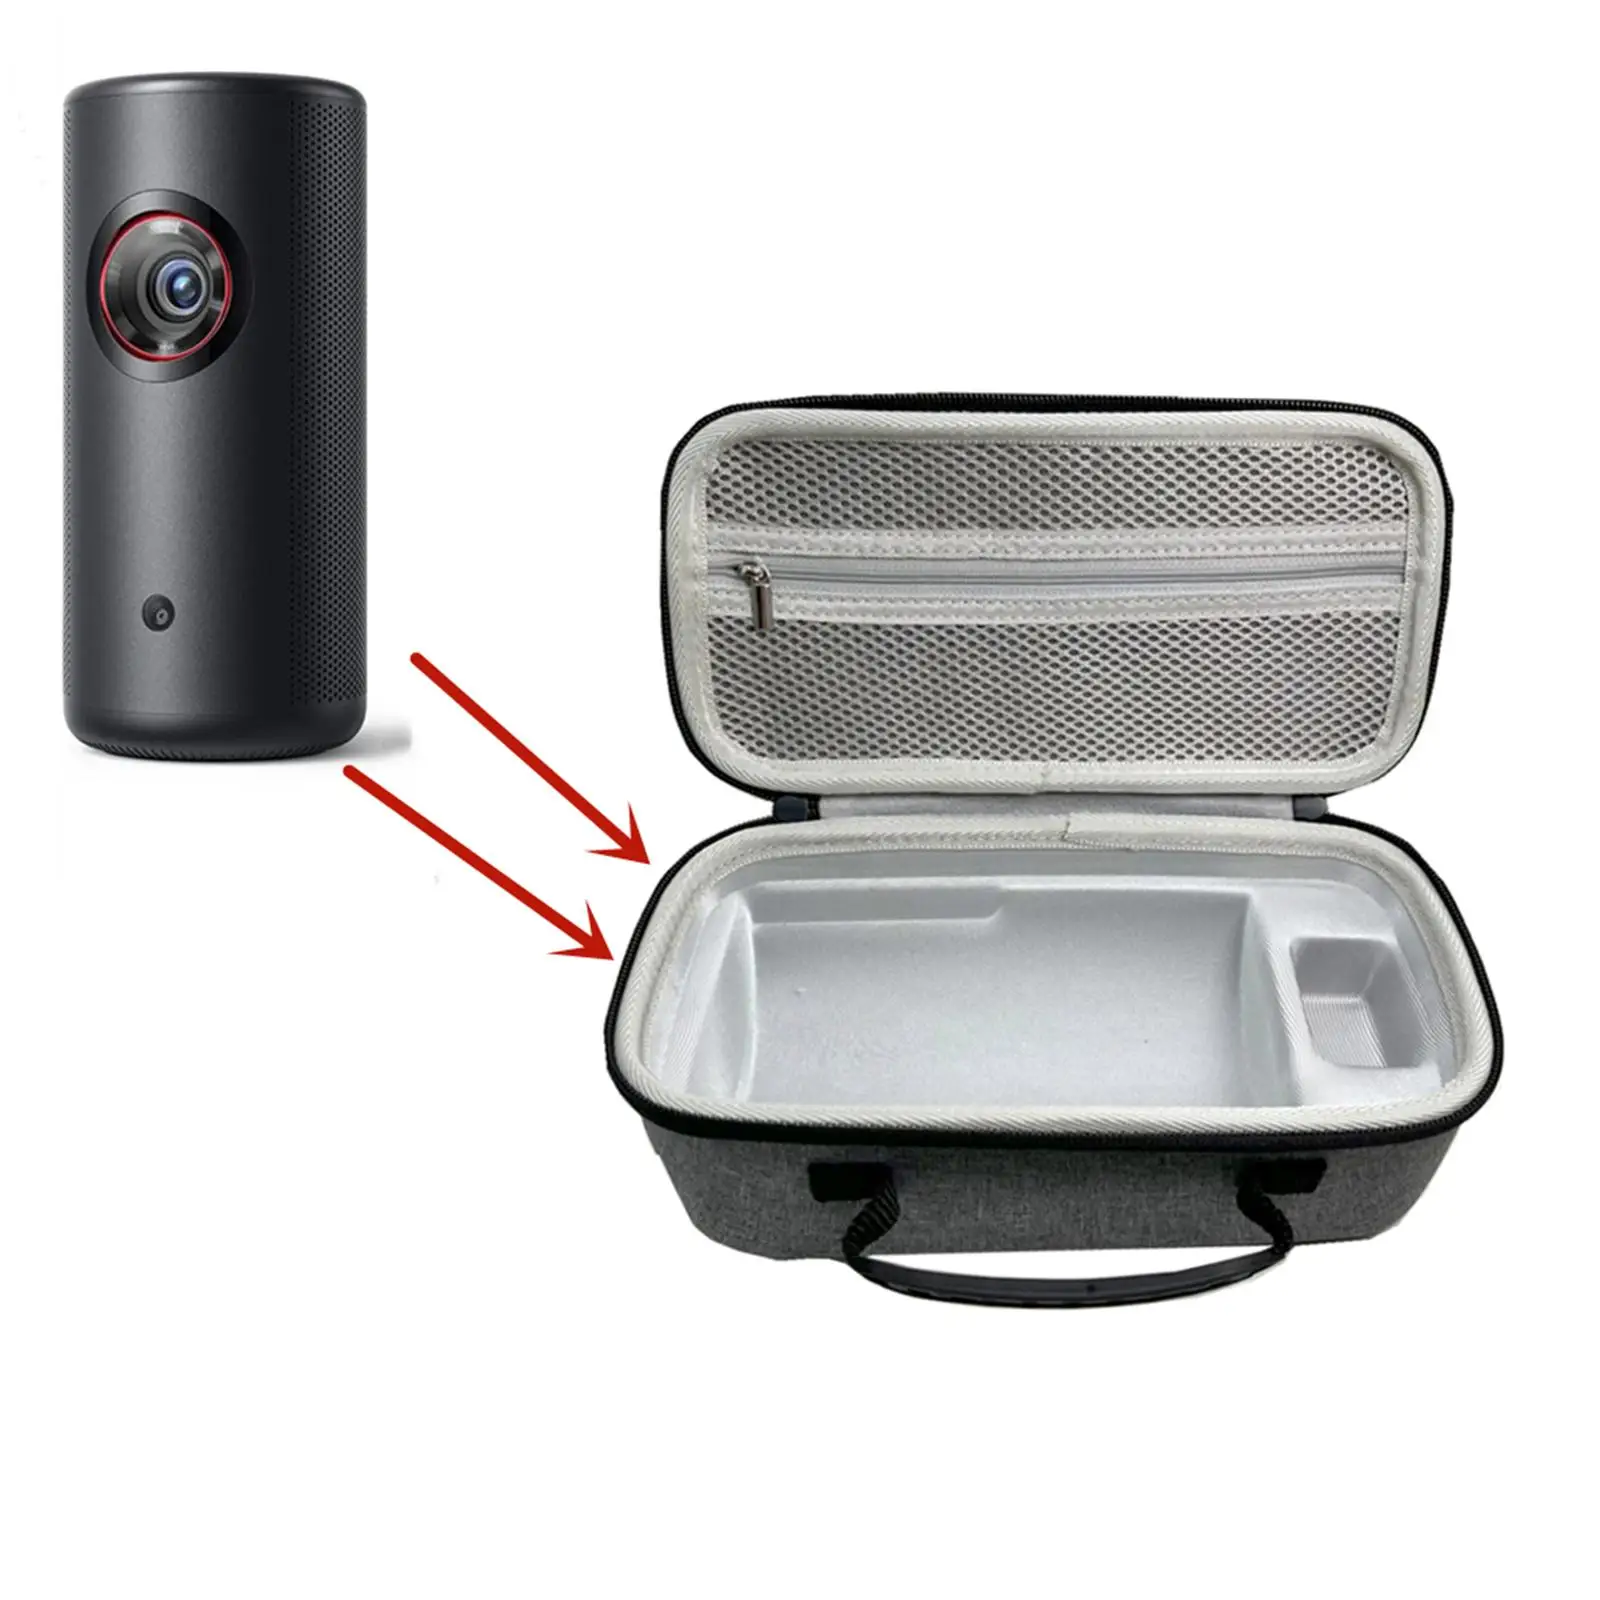 Projector Travel Case Carrying Handbag Projector Carrying Bag for capsule Projector and Accessories Gray Protective